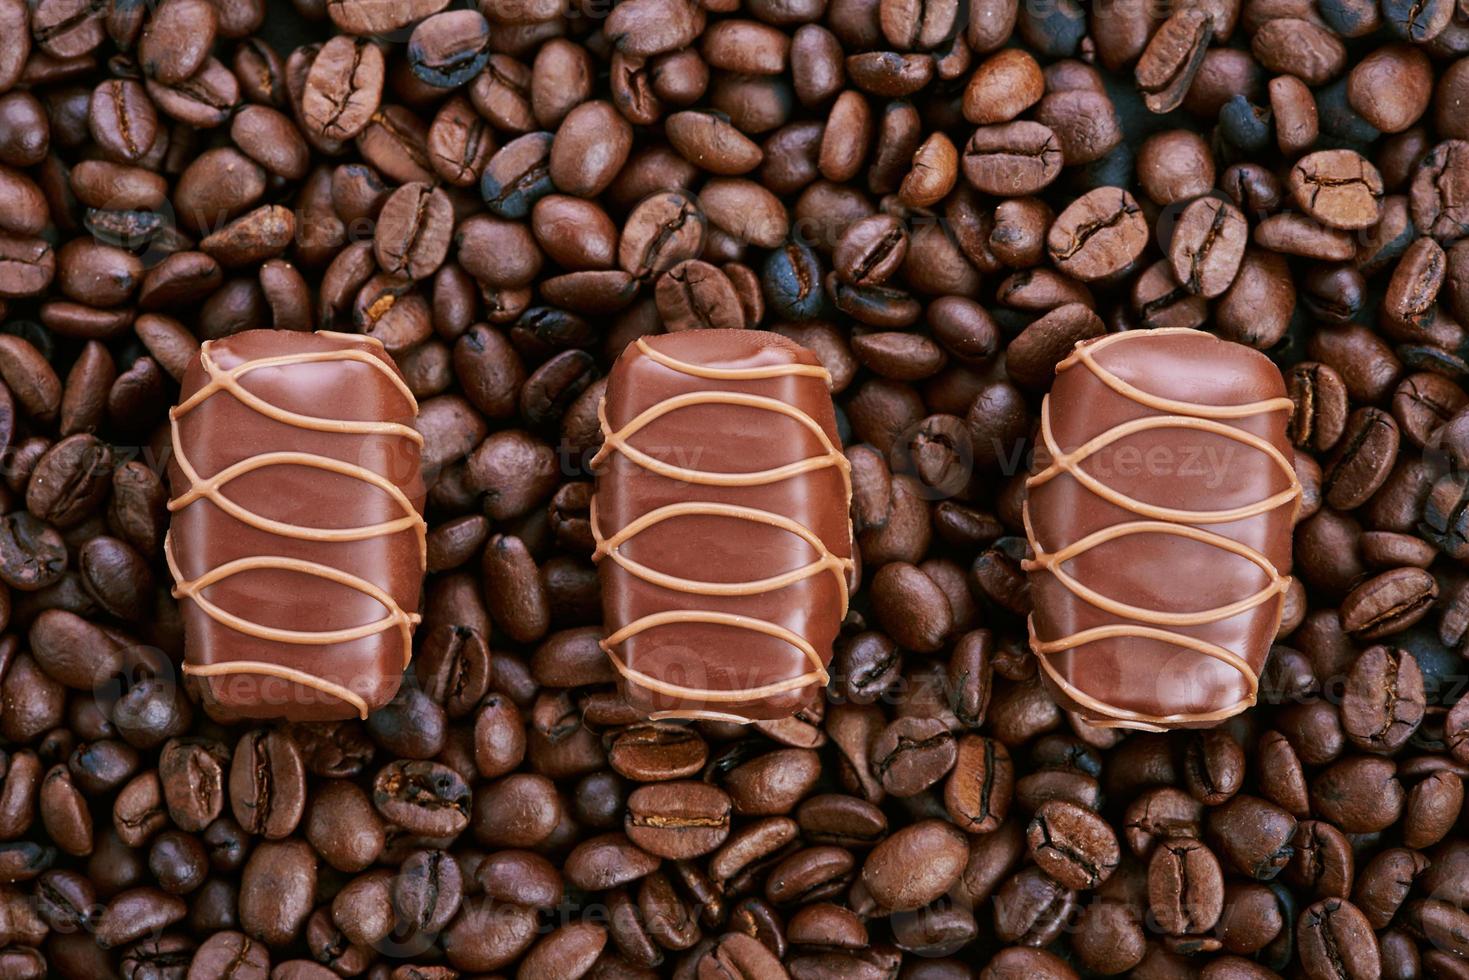 Chocolate candies and coffee photo